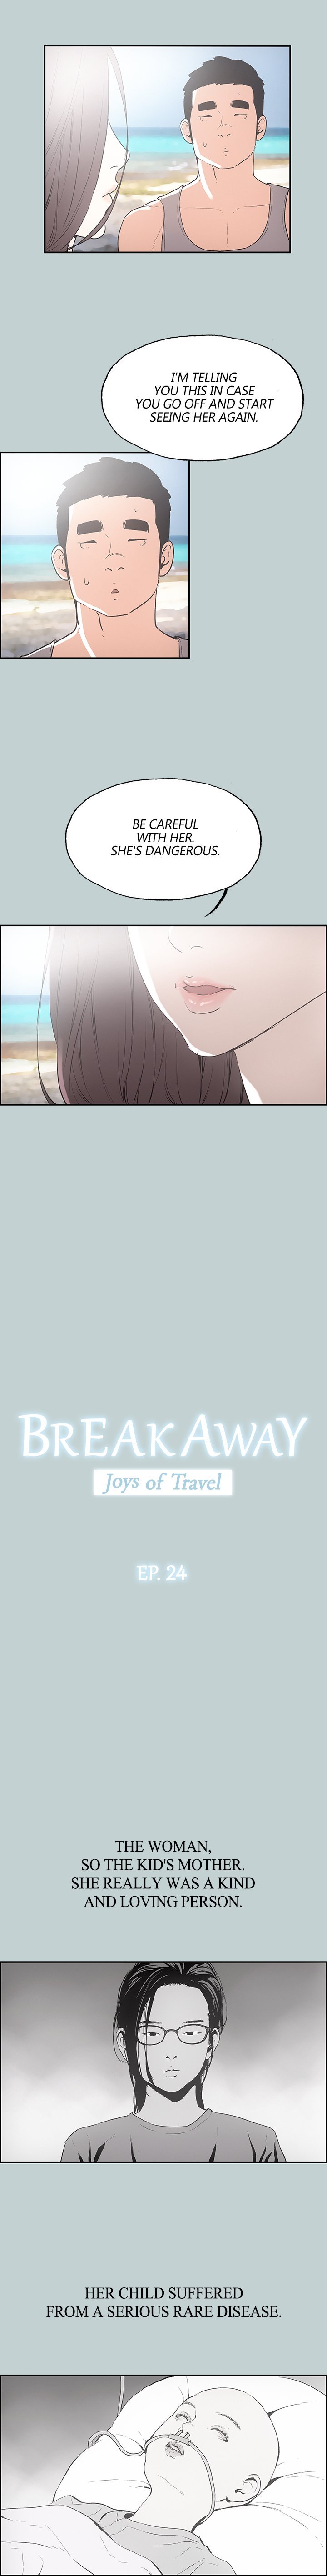 breakaway-joys-of-travel-chap-24-2